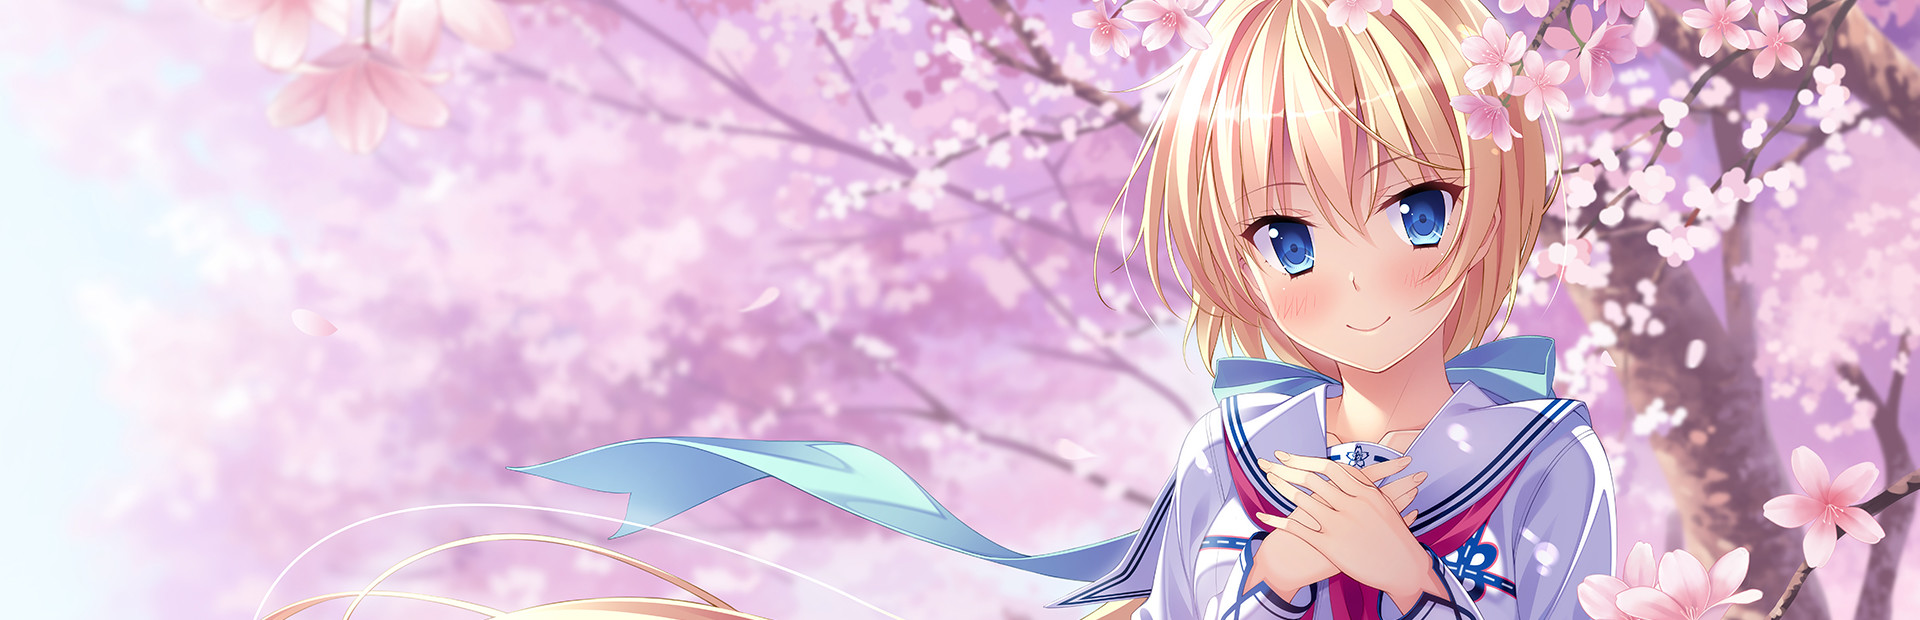  Sakura no Mori † Dreamers 2 cover image